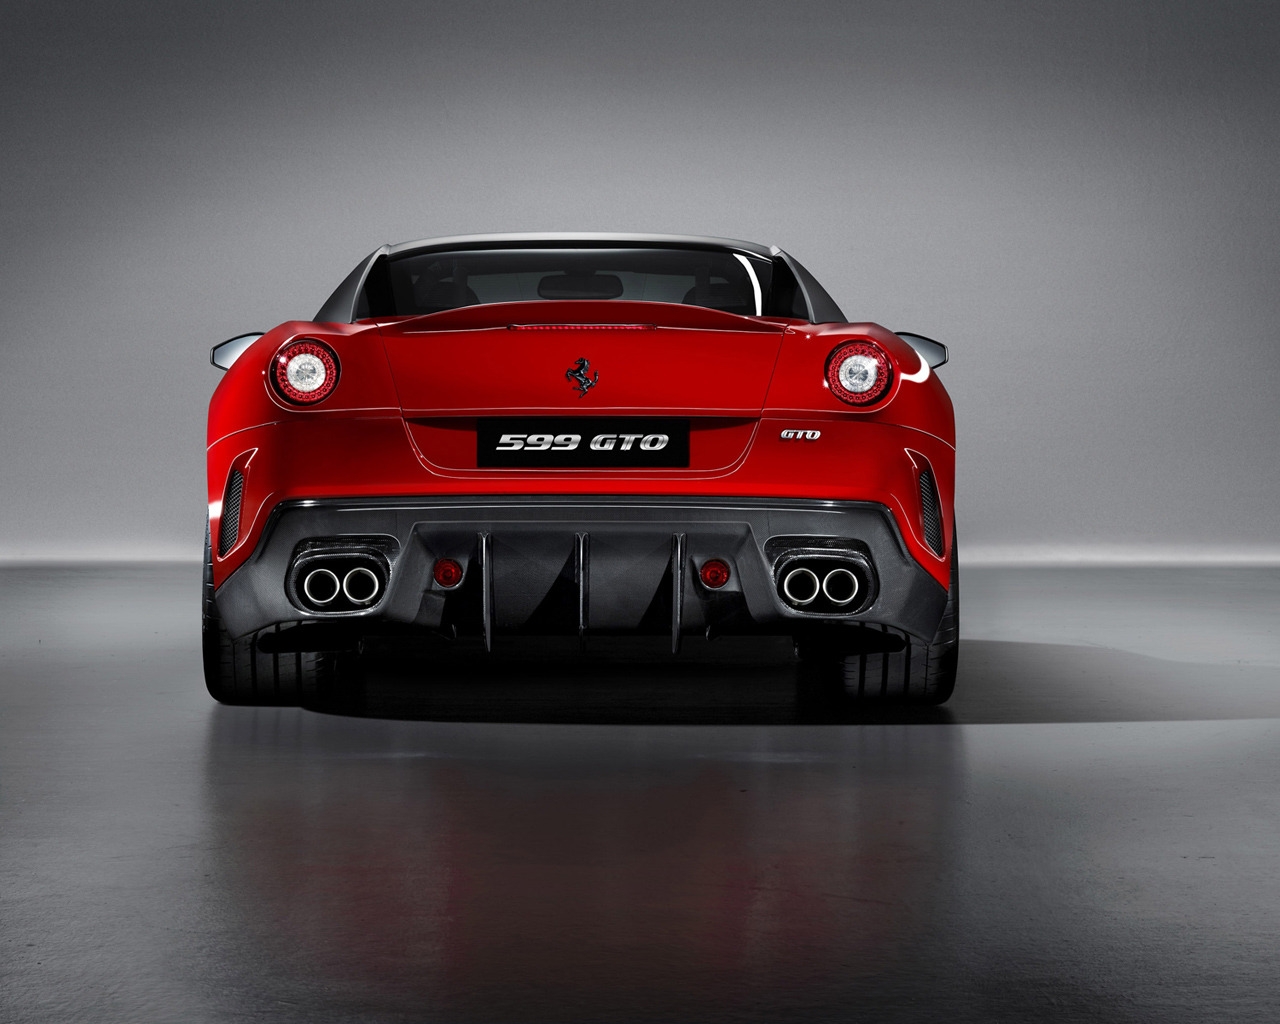 Ferrari 599 GTO Rear for 1280 x 1024 resolution